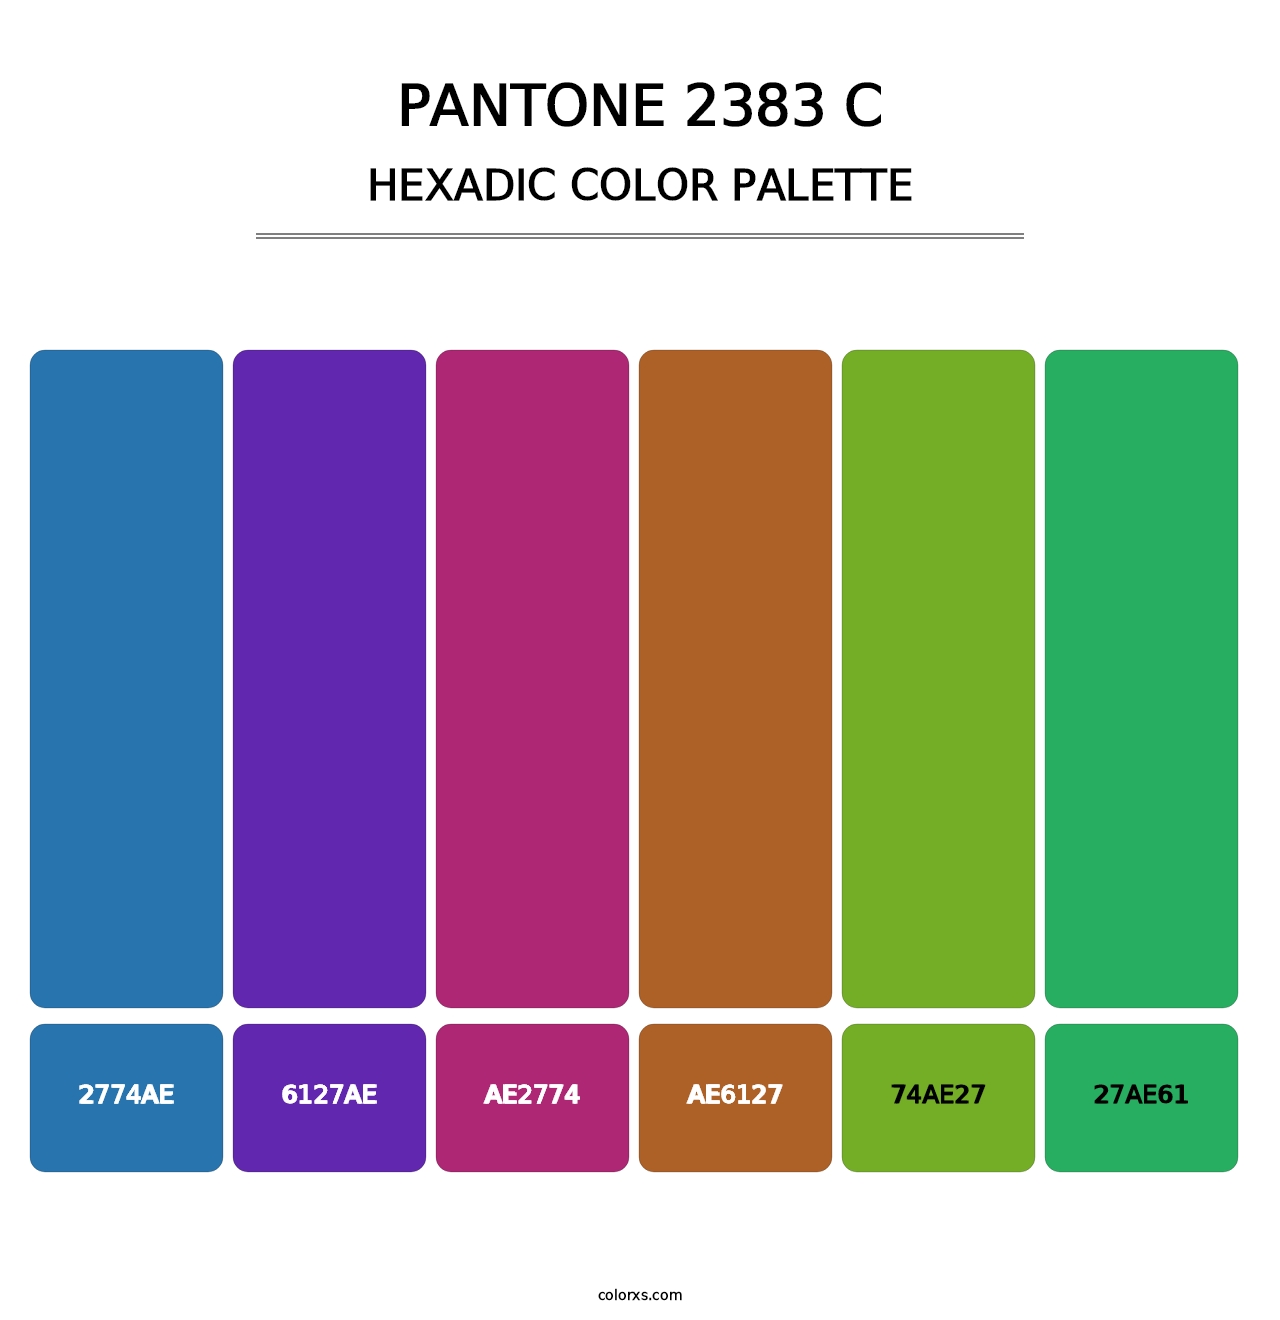 PANTONE 2383 C - Hexadic Color Palette